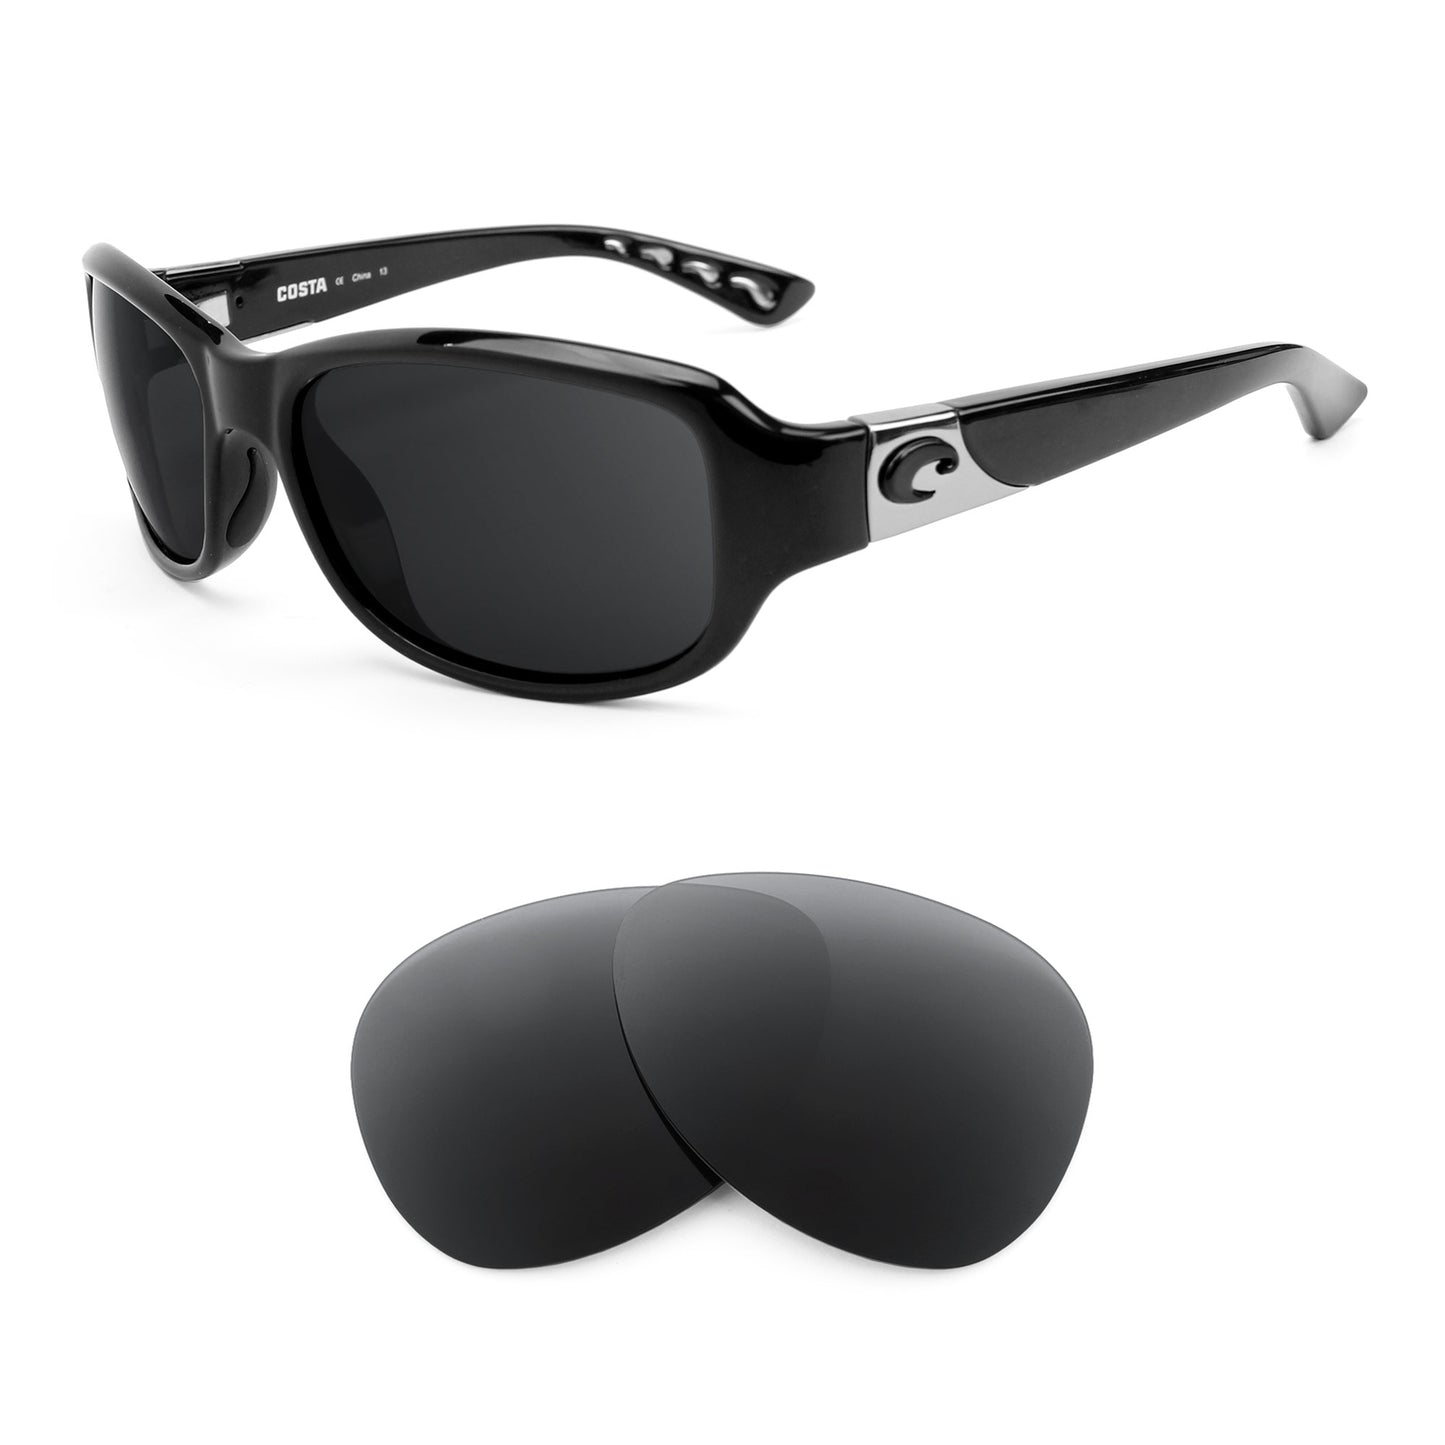 Costa Las Olas sunglasses with replacement lenses